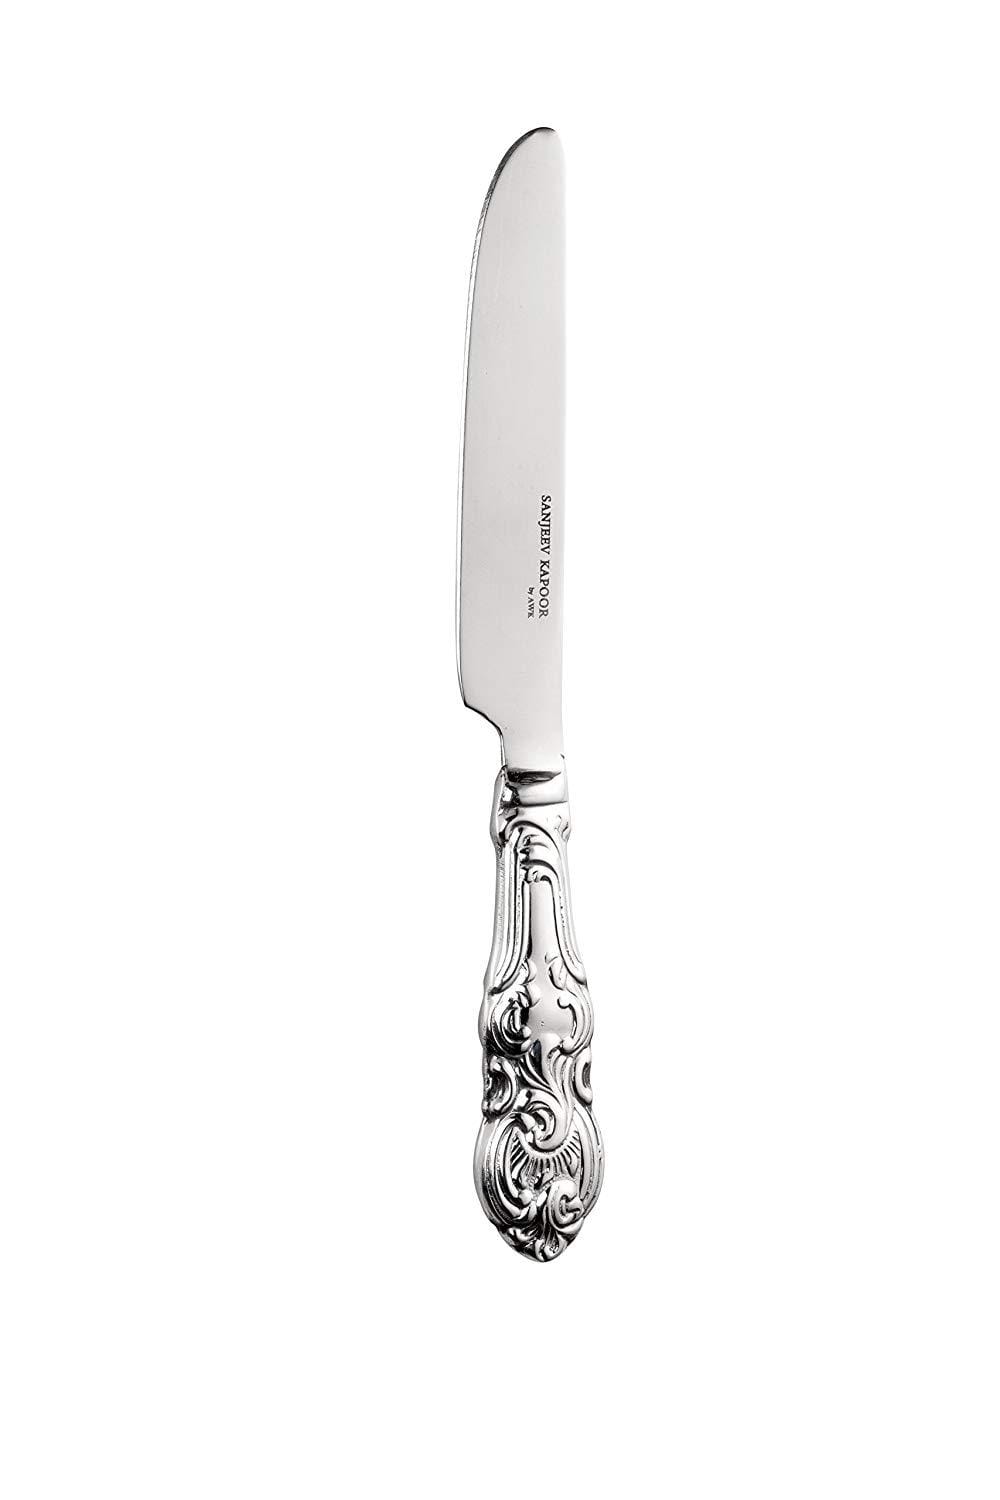 Sanjeev Kapoor Empire Stainless Steel Dessert Knife, Silver | Cutlery Set